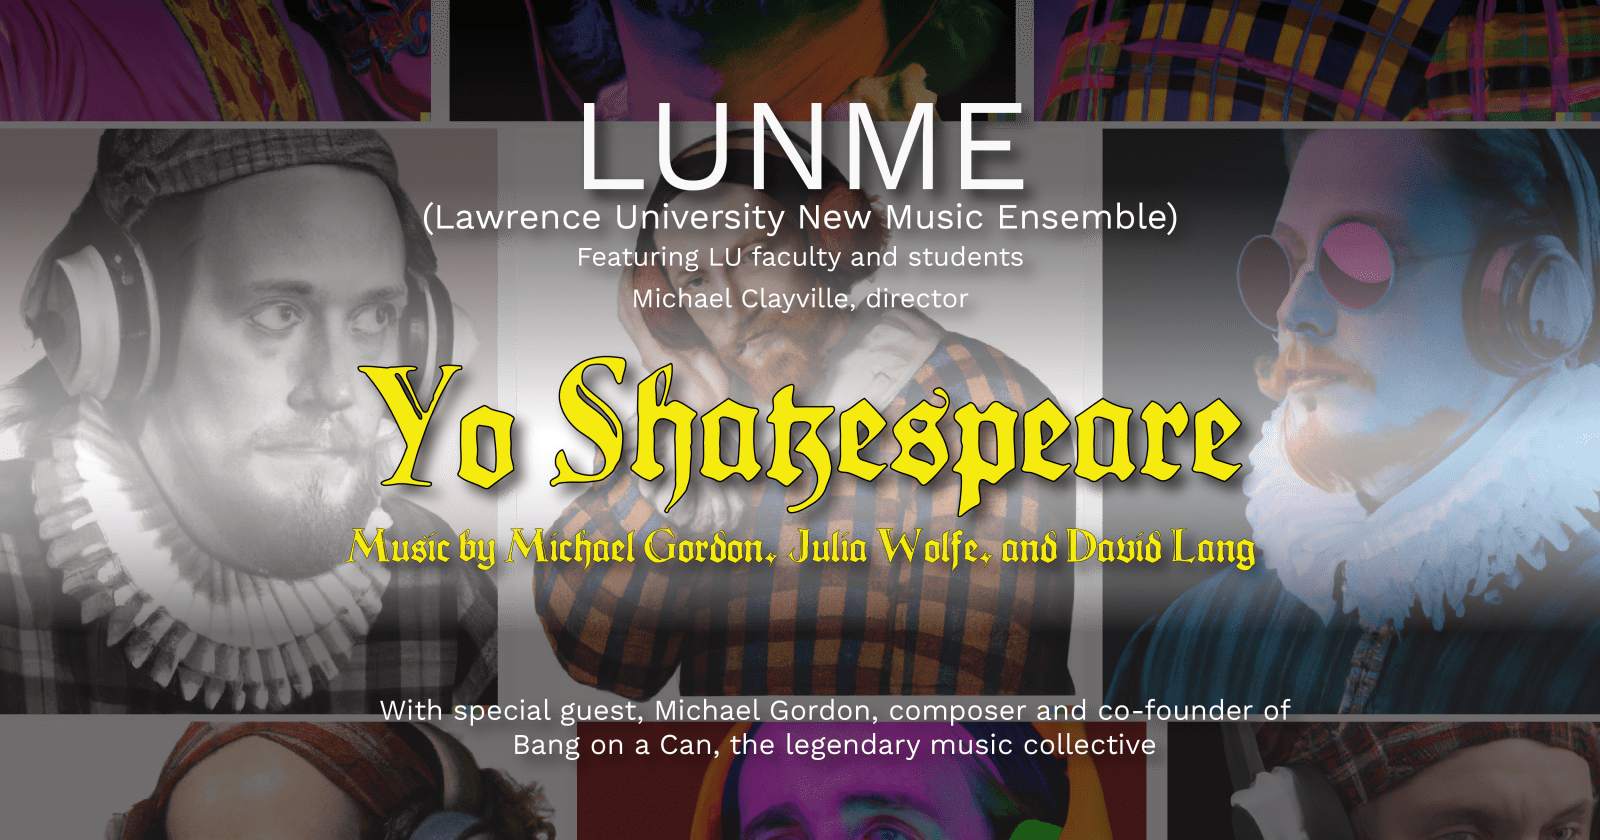 Lawrence University New Music Ensemble “Yo Shakespeare” cover